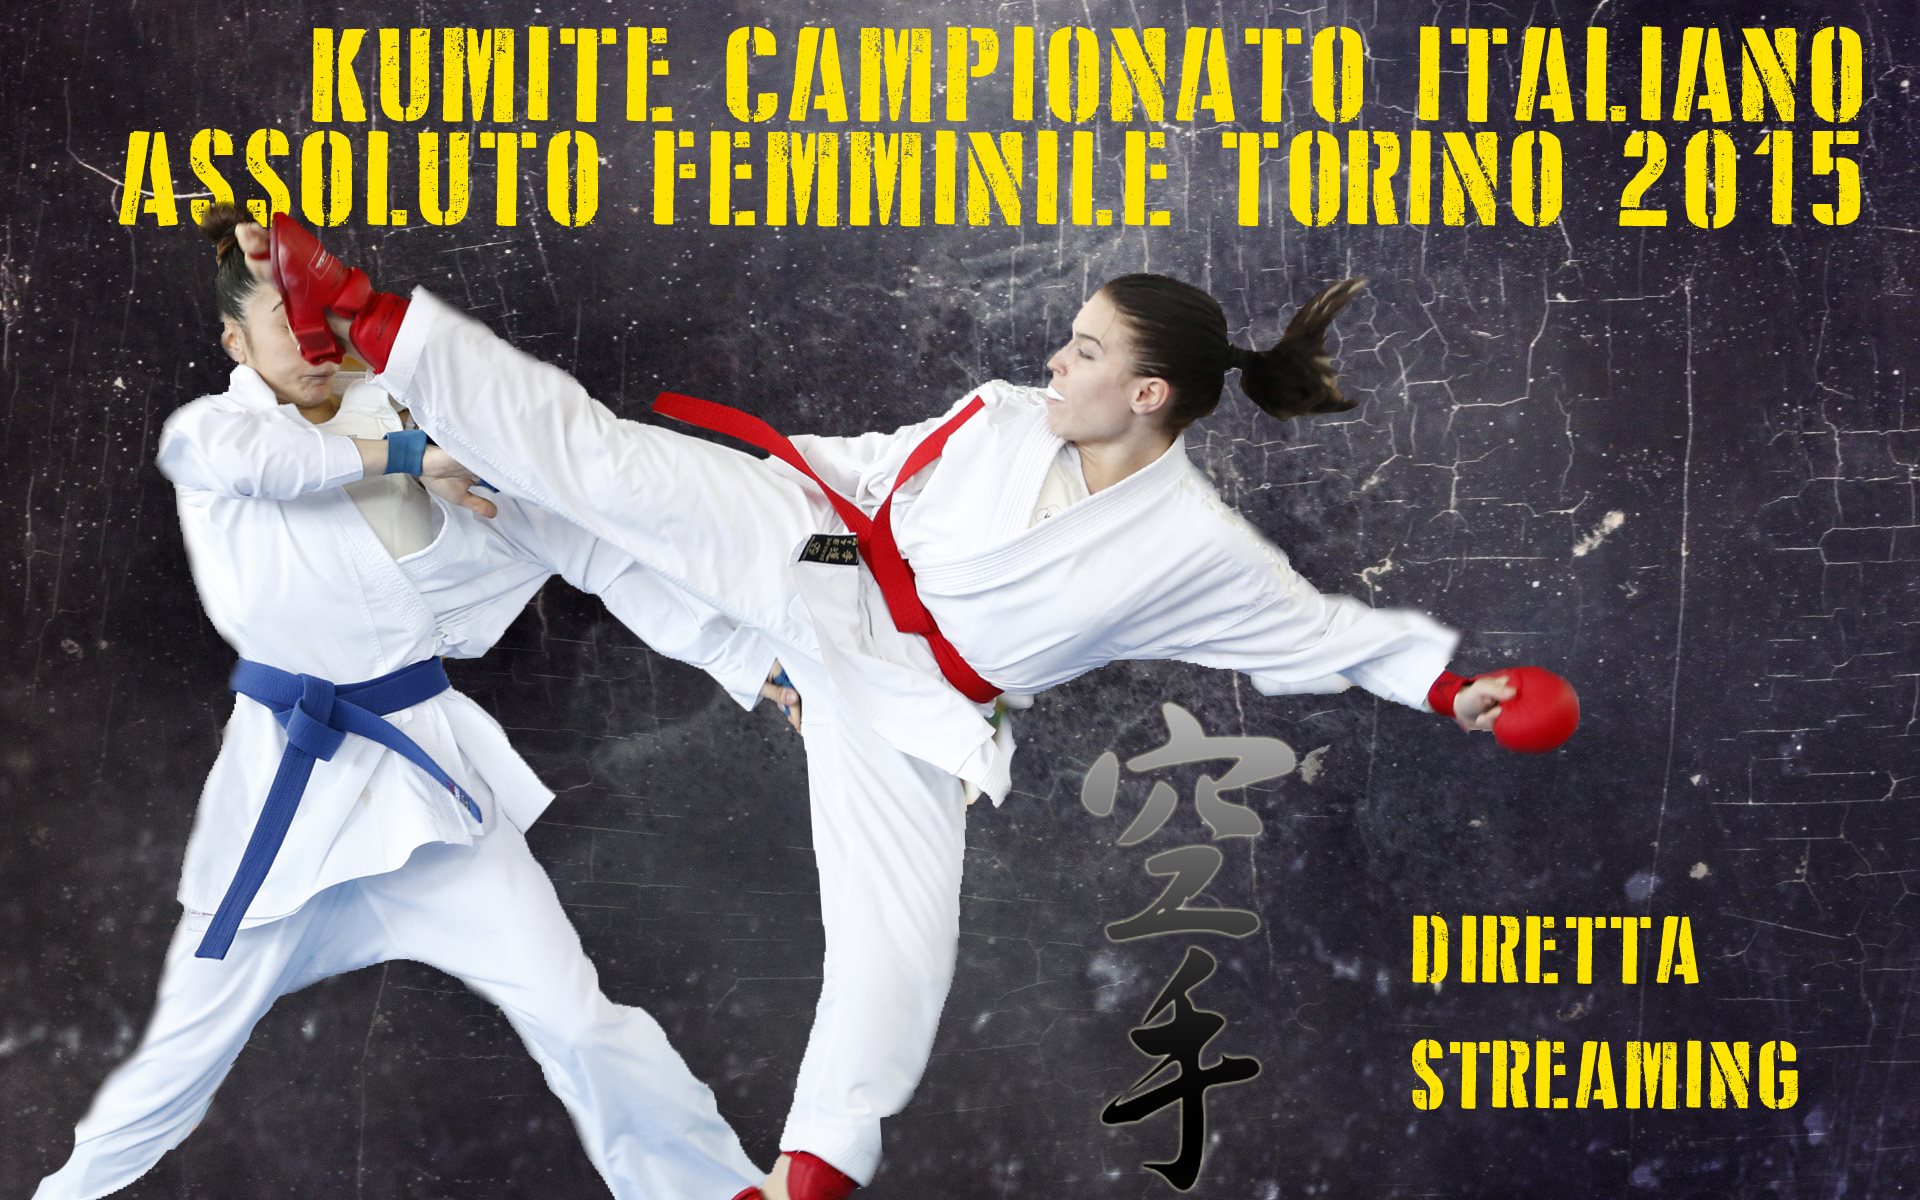 Festeggiate a Torino le Campionesse Assolute kumite